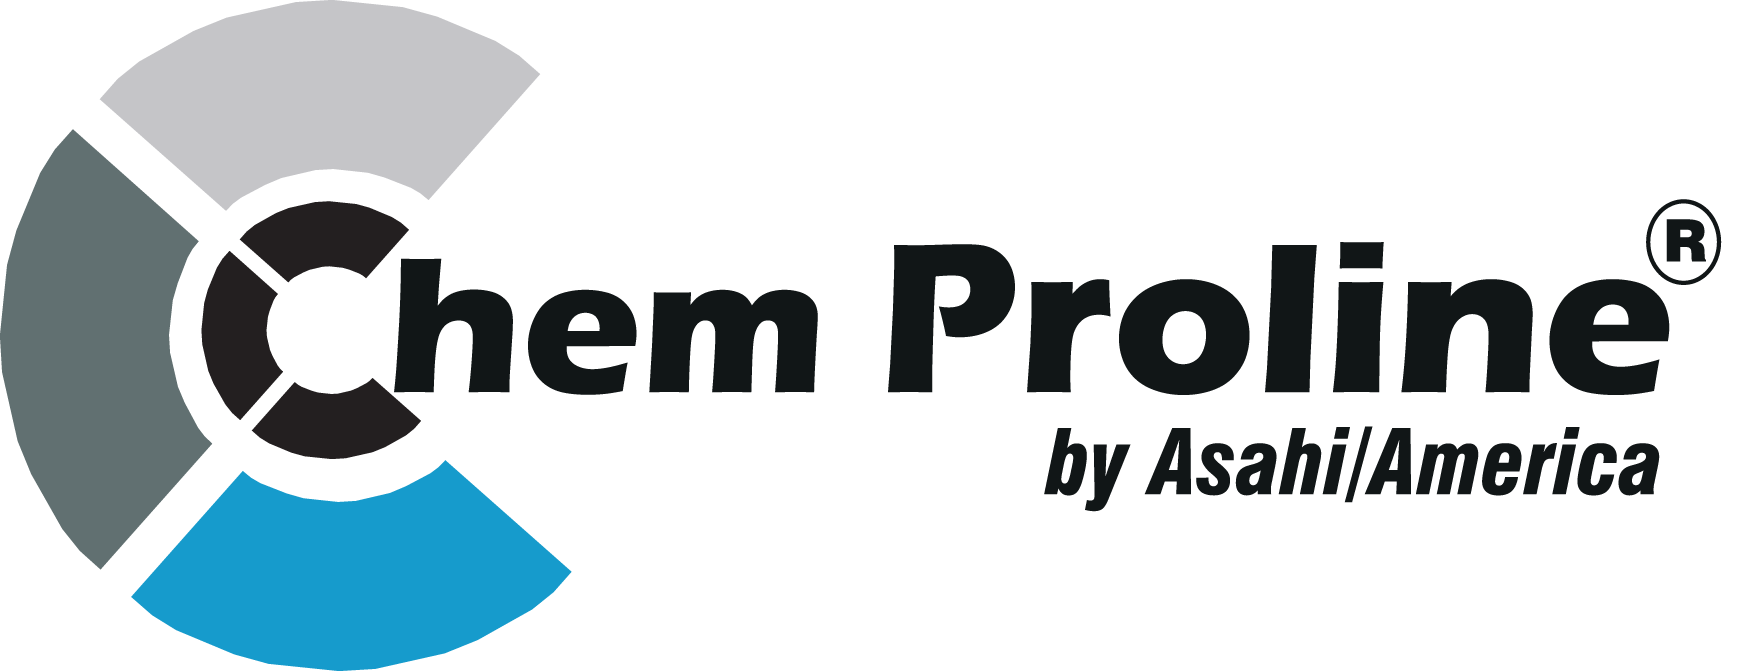 Chem Proline, logotipo actualizado feb 2012